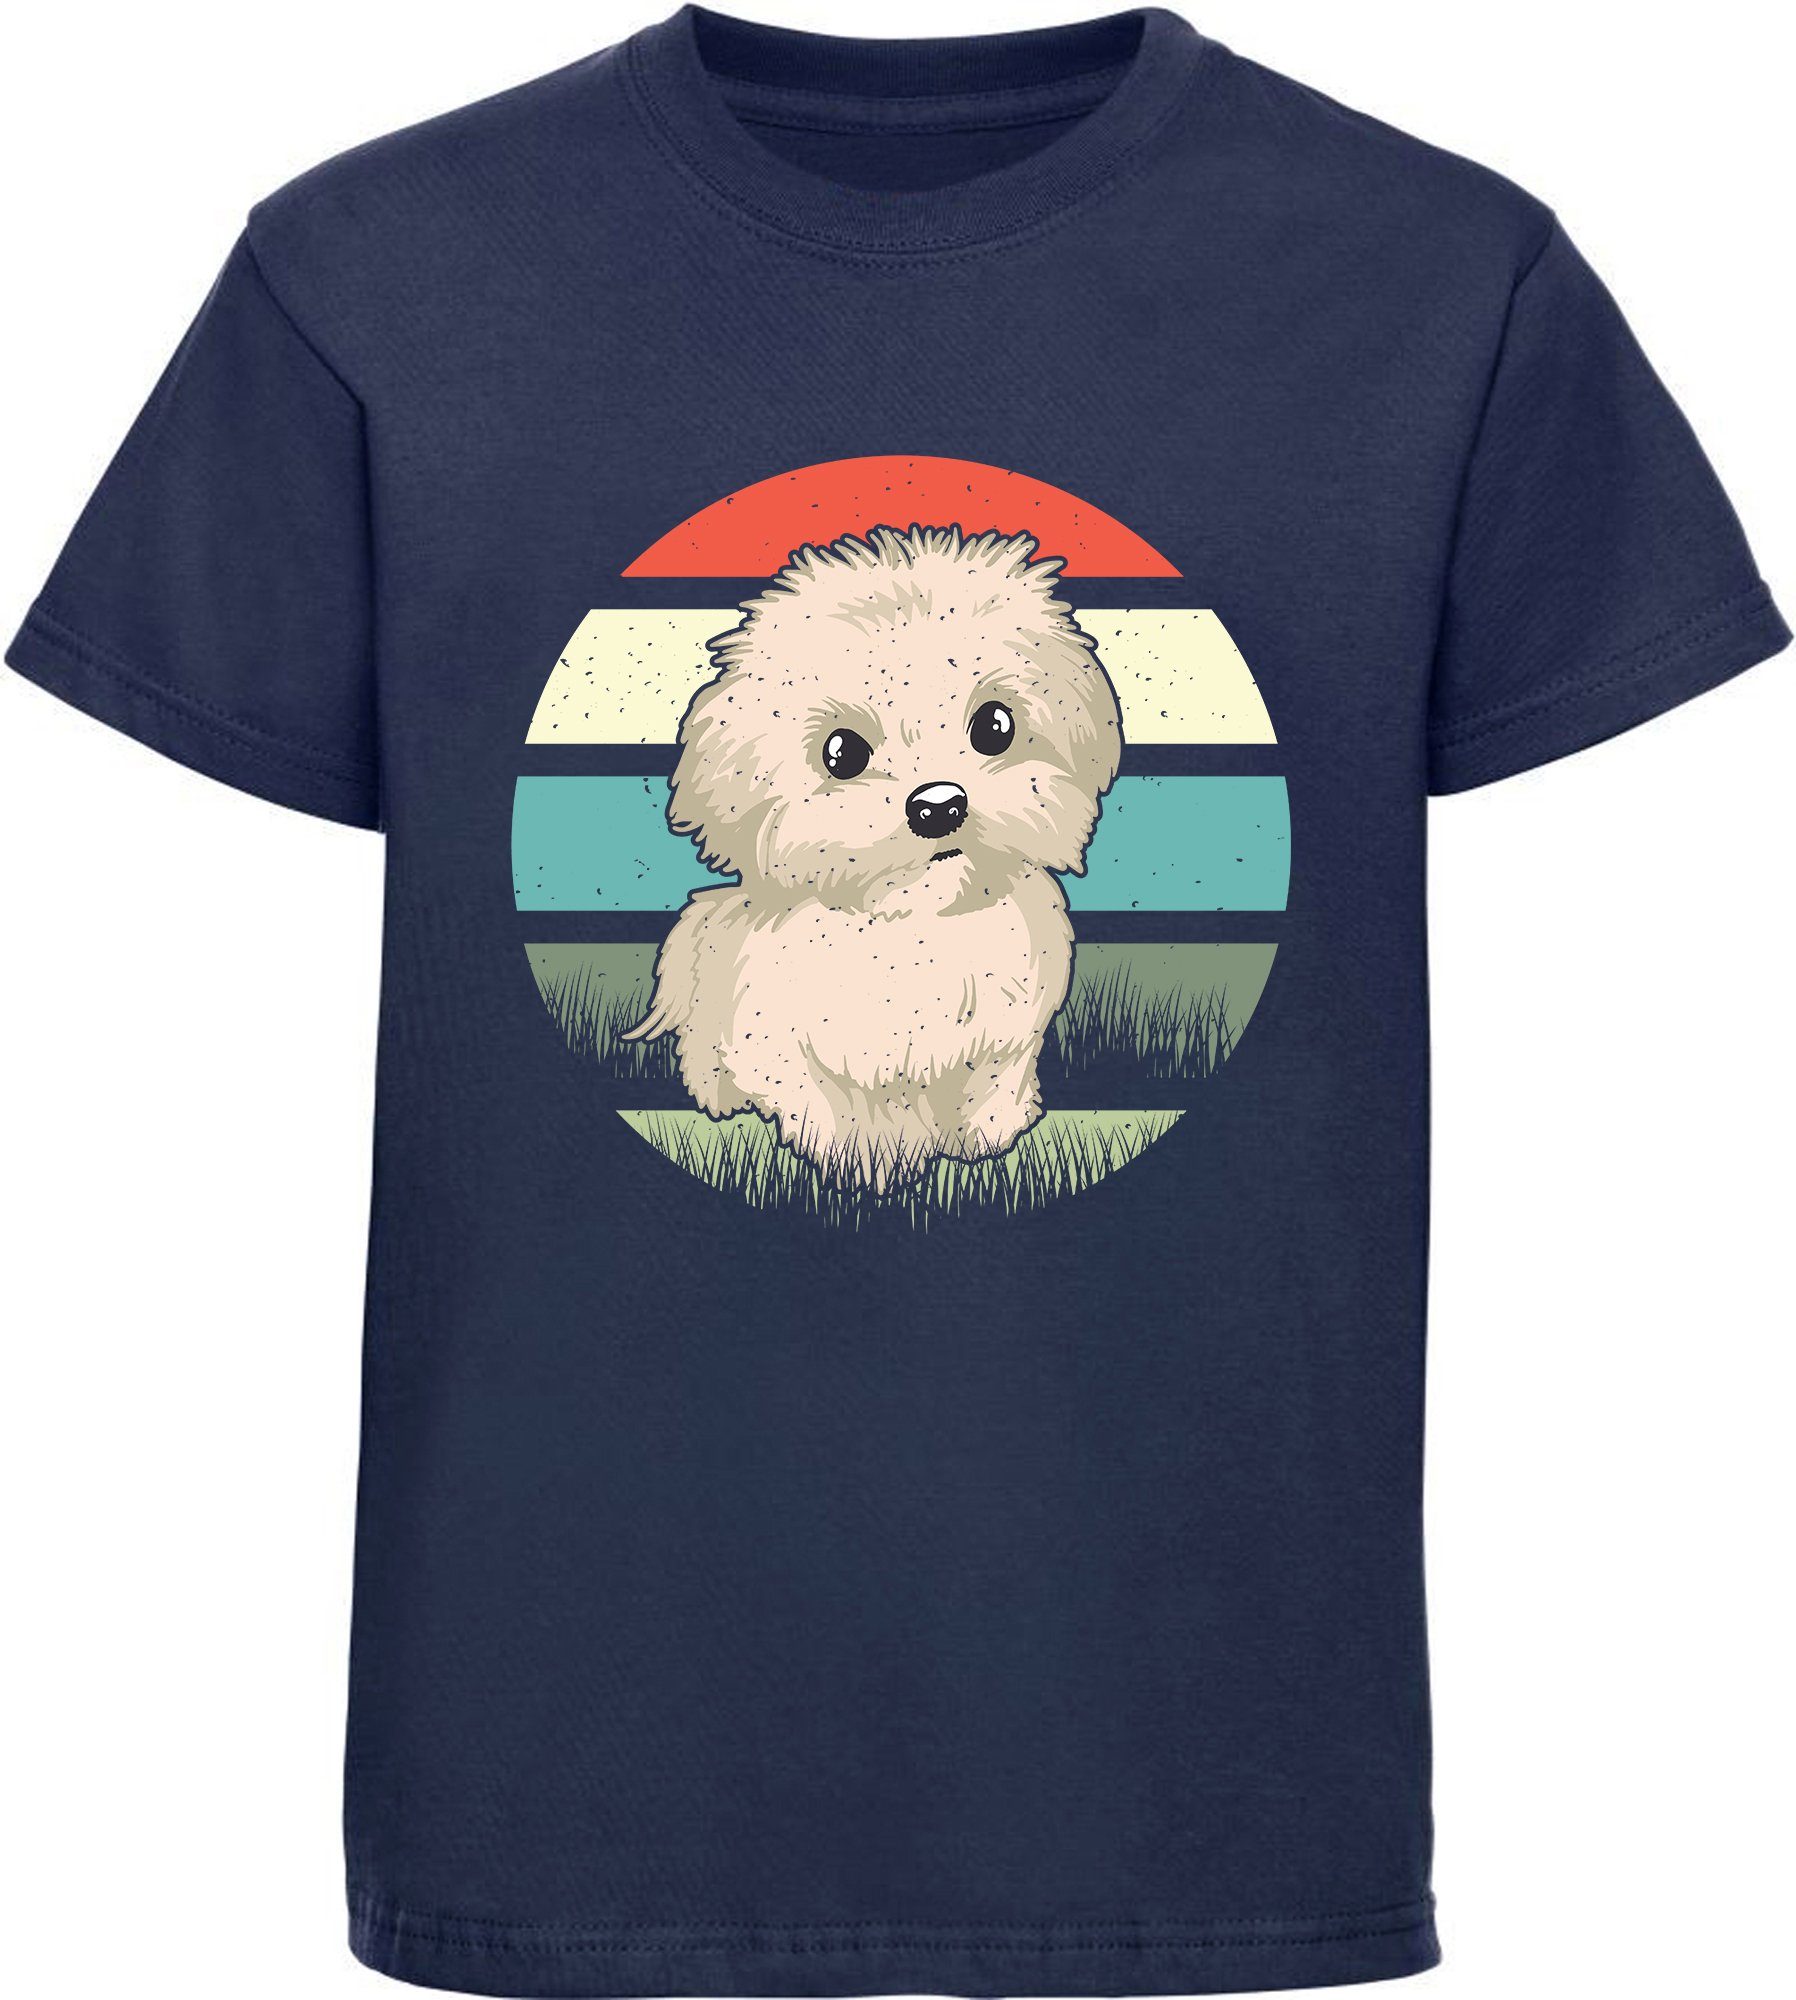 MyDesign24 Print-Shirt Kinder Hunde T-Shirt bedruckt - Retro Malteser Welpen Baumwollshirt mit Aufdruck, i242 navy blau | T-Shirts